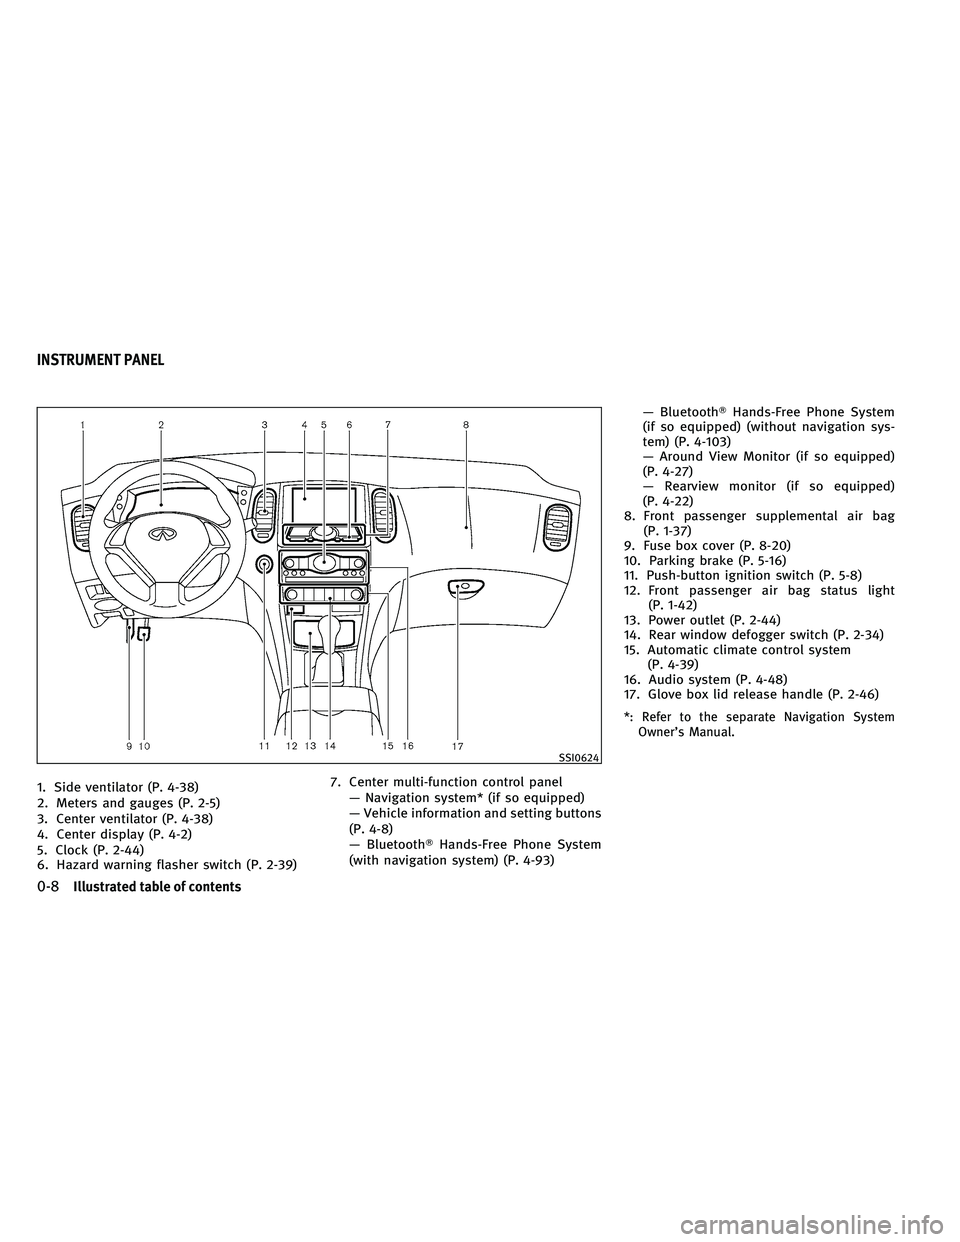 INFINITI EX 2011  Owners Manual 1. Side ventilator (P. 4-38)
2. Meters and gauges (P. 2-5)
3. Center ventilator (P. 4-38)
4. Center display (P. 4-2)
5. Clock (P. 2-44)
6. Hazard warning flasher switch (P. 2-39)7. Center multi-functi